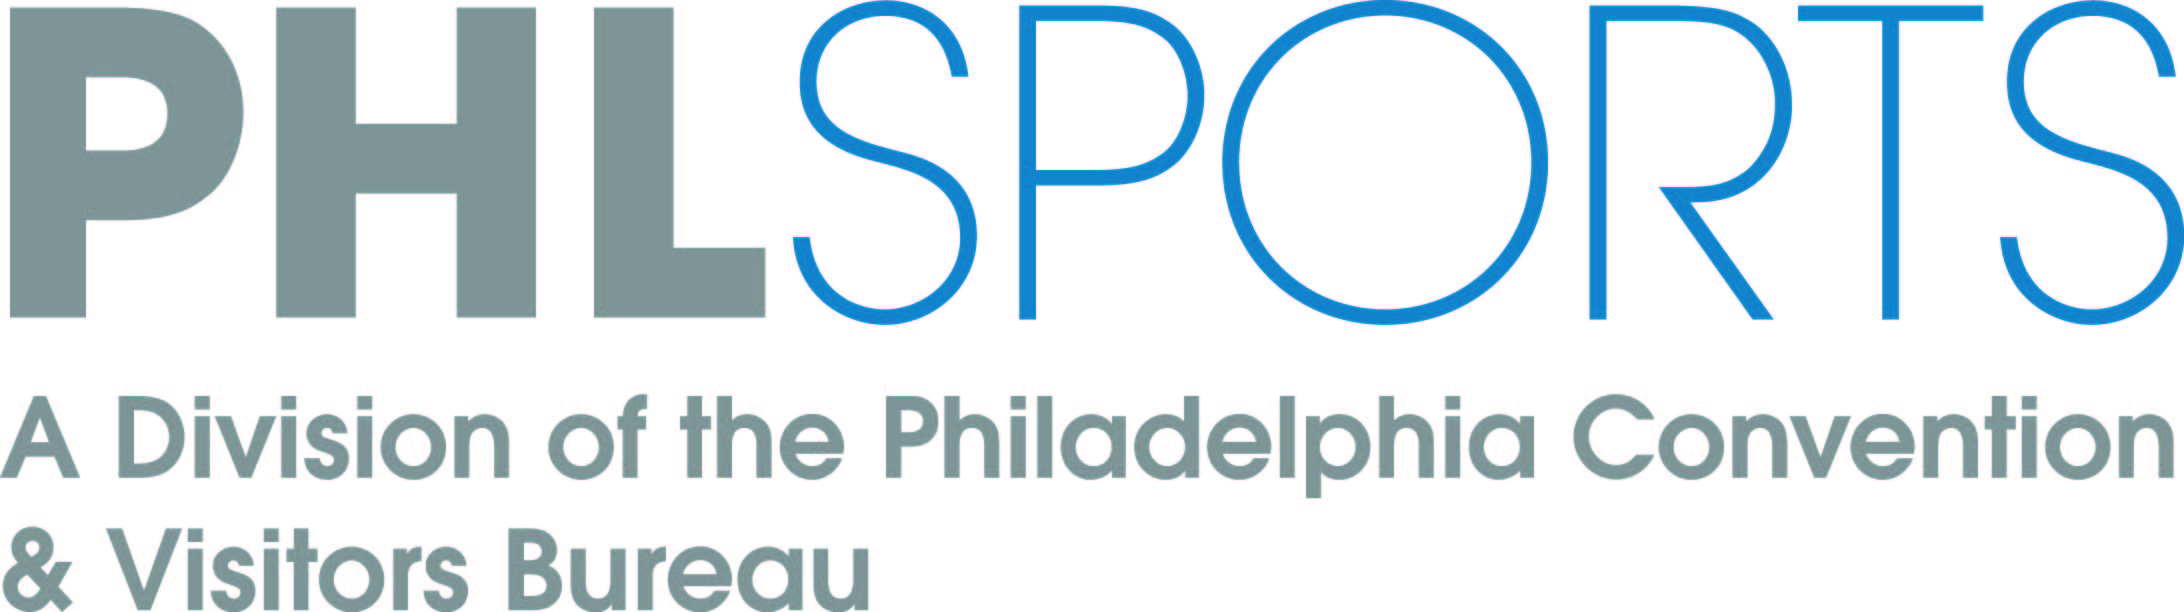 PHL Sports Logo